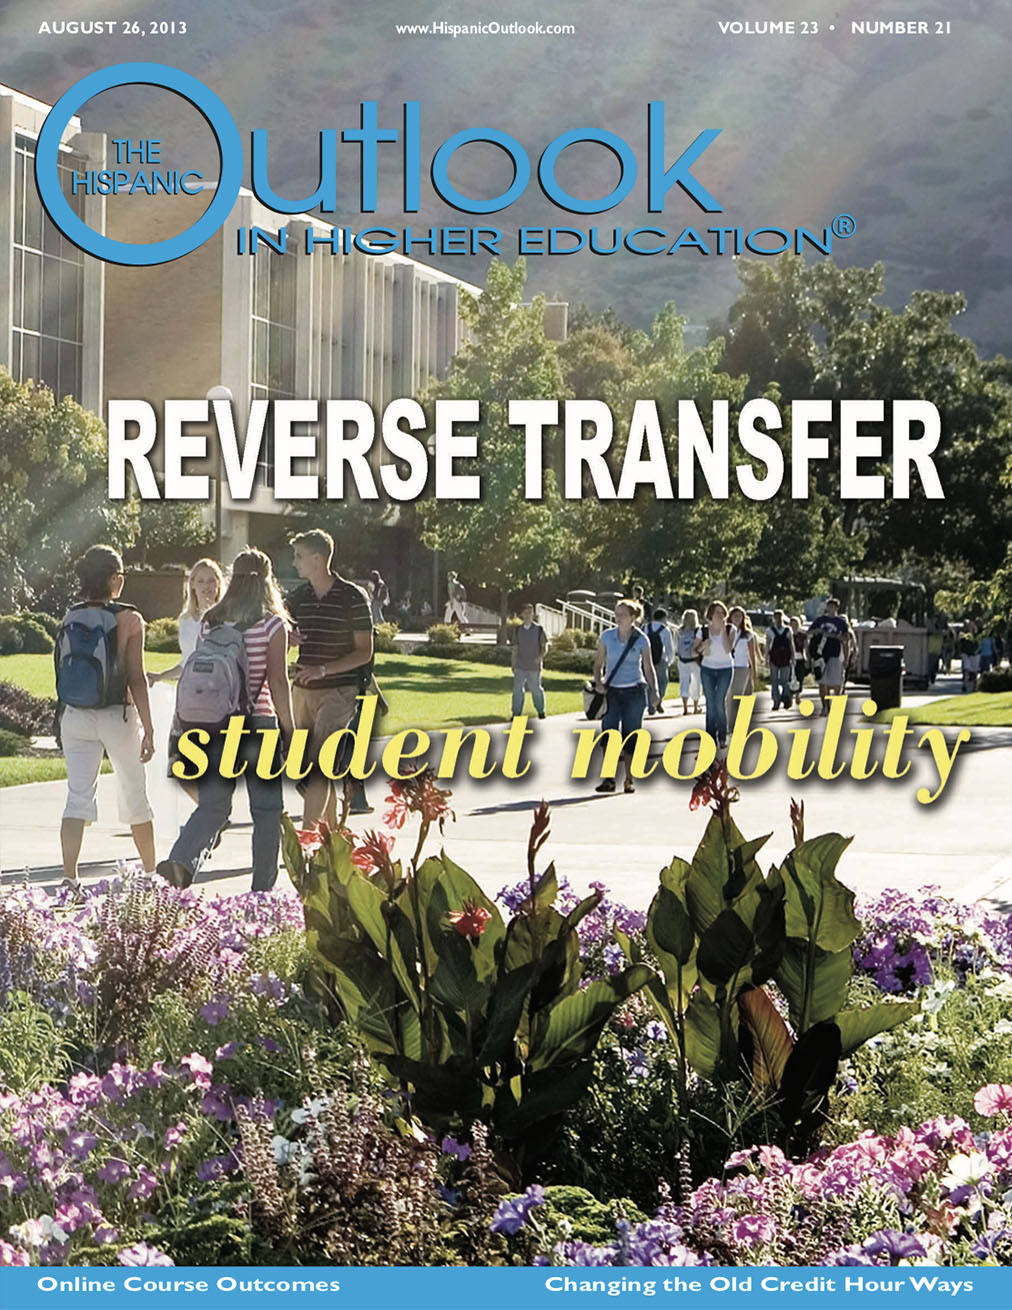 Reverse Transfer Student mobility